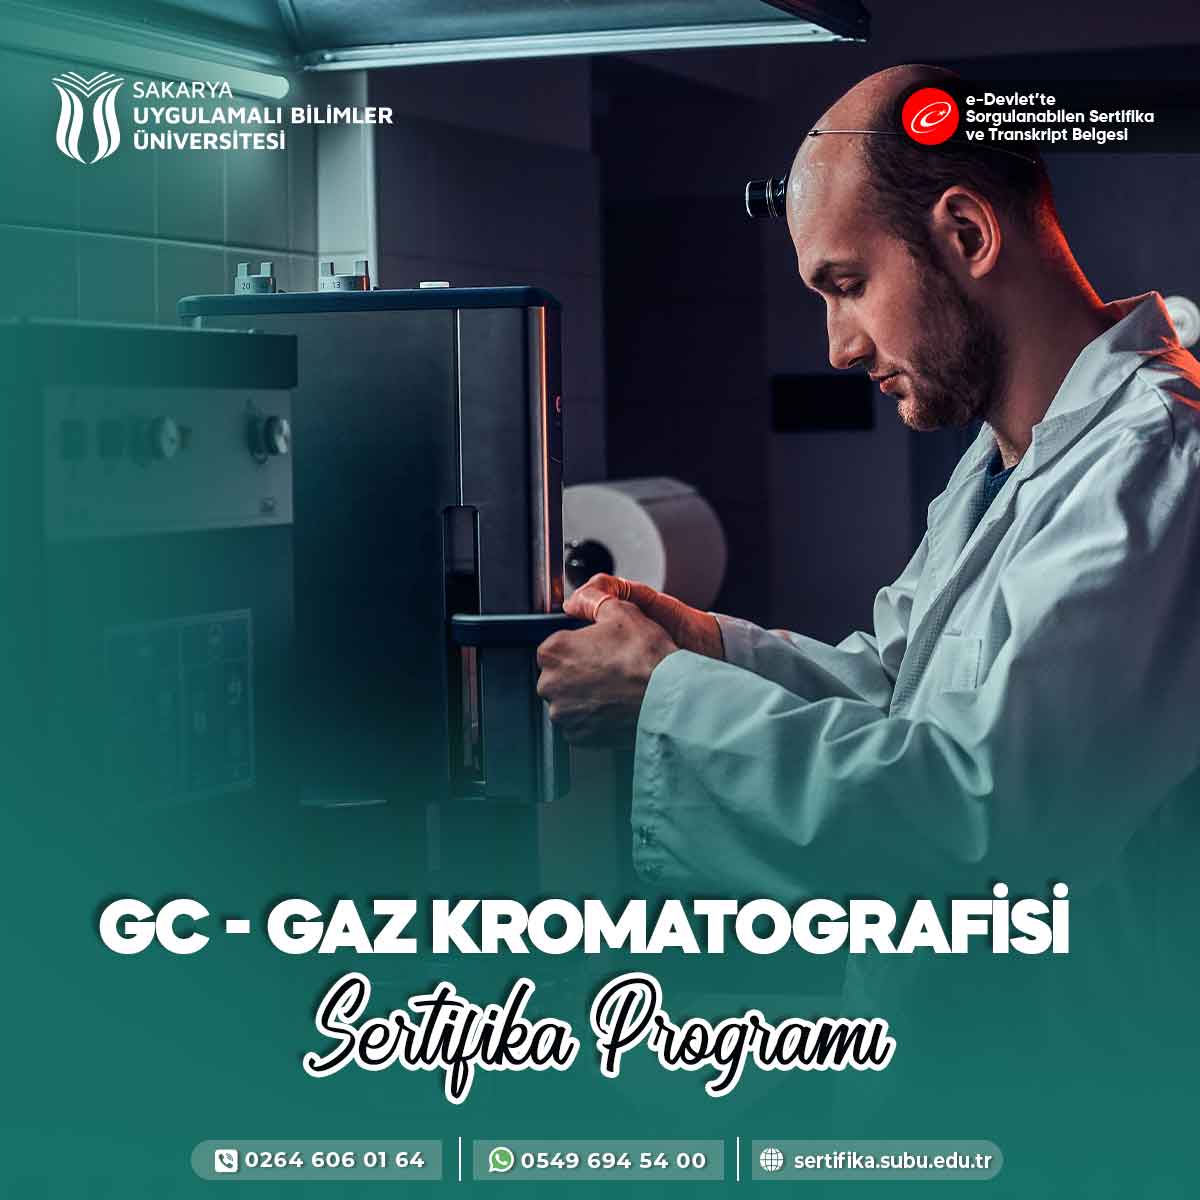 GC - Gaz Kromatografisi Eğitimi